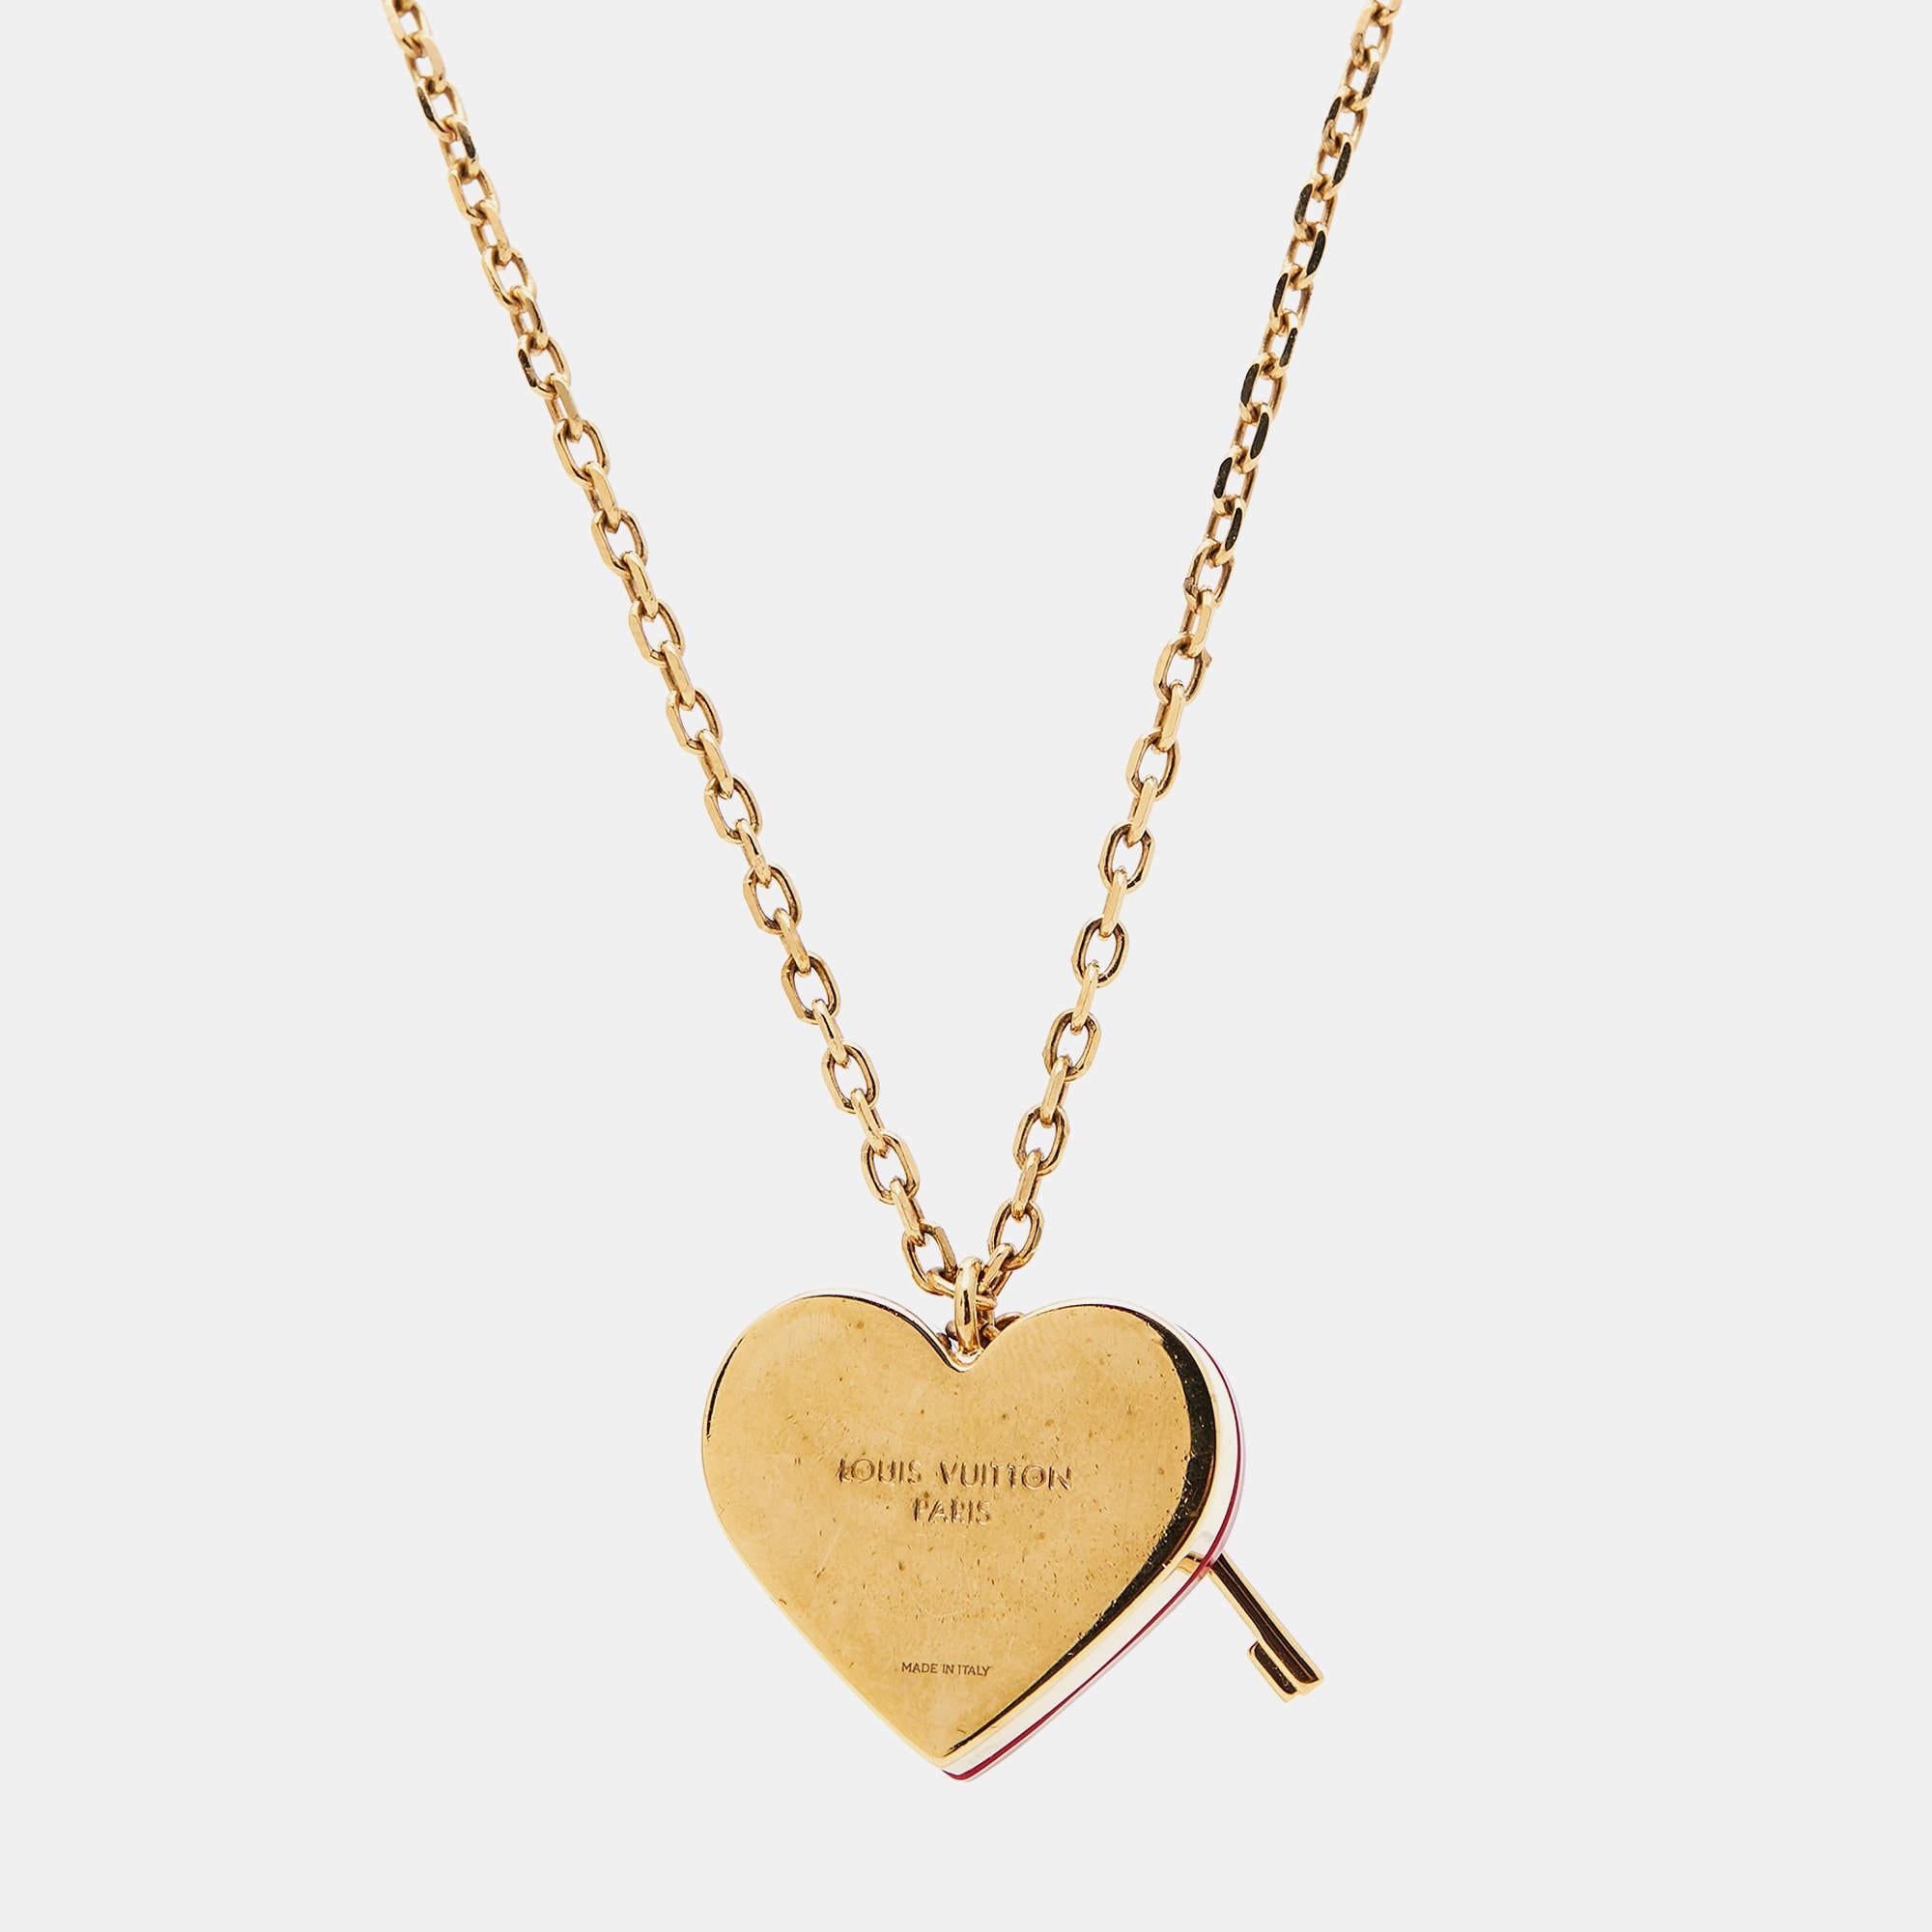 Louis Vuitton Lock Me Heart Resin Goldfarbene Halskette in Goldtönen (Ästhetizismus) im Angebot